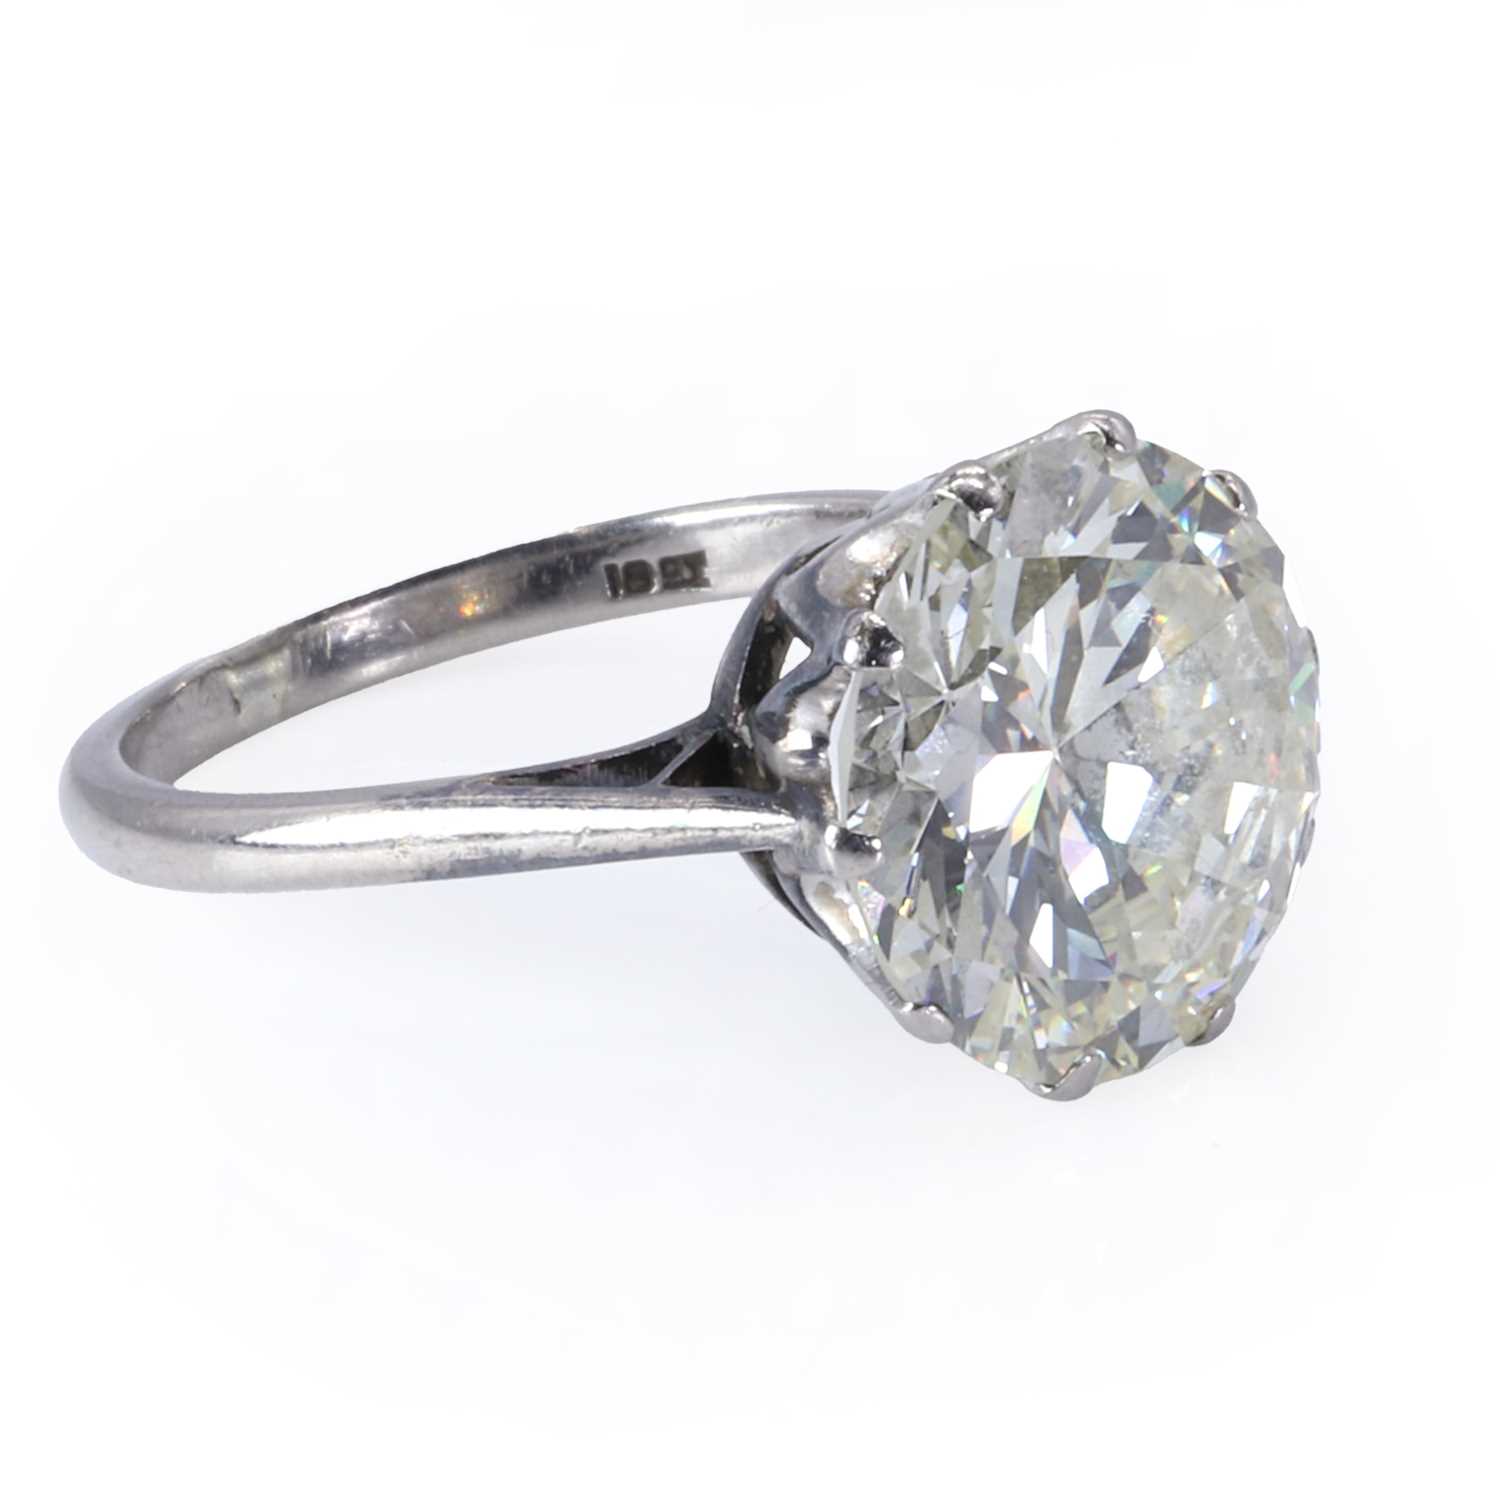 An impressive single stone diamond ring, - Image 3 of 4